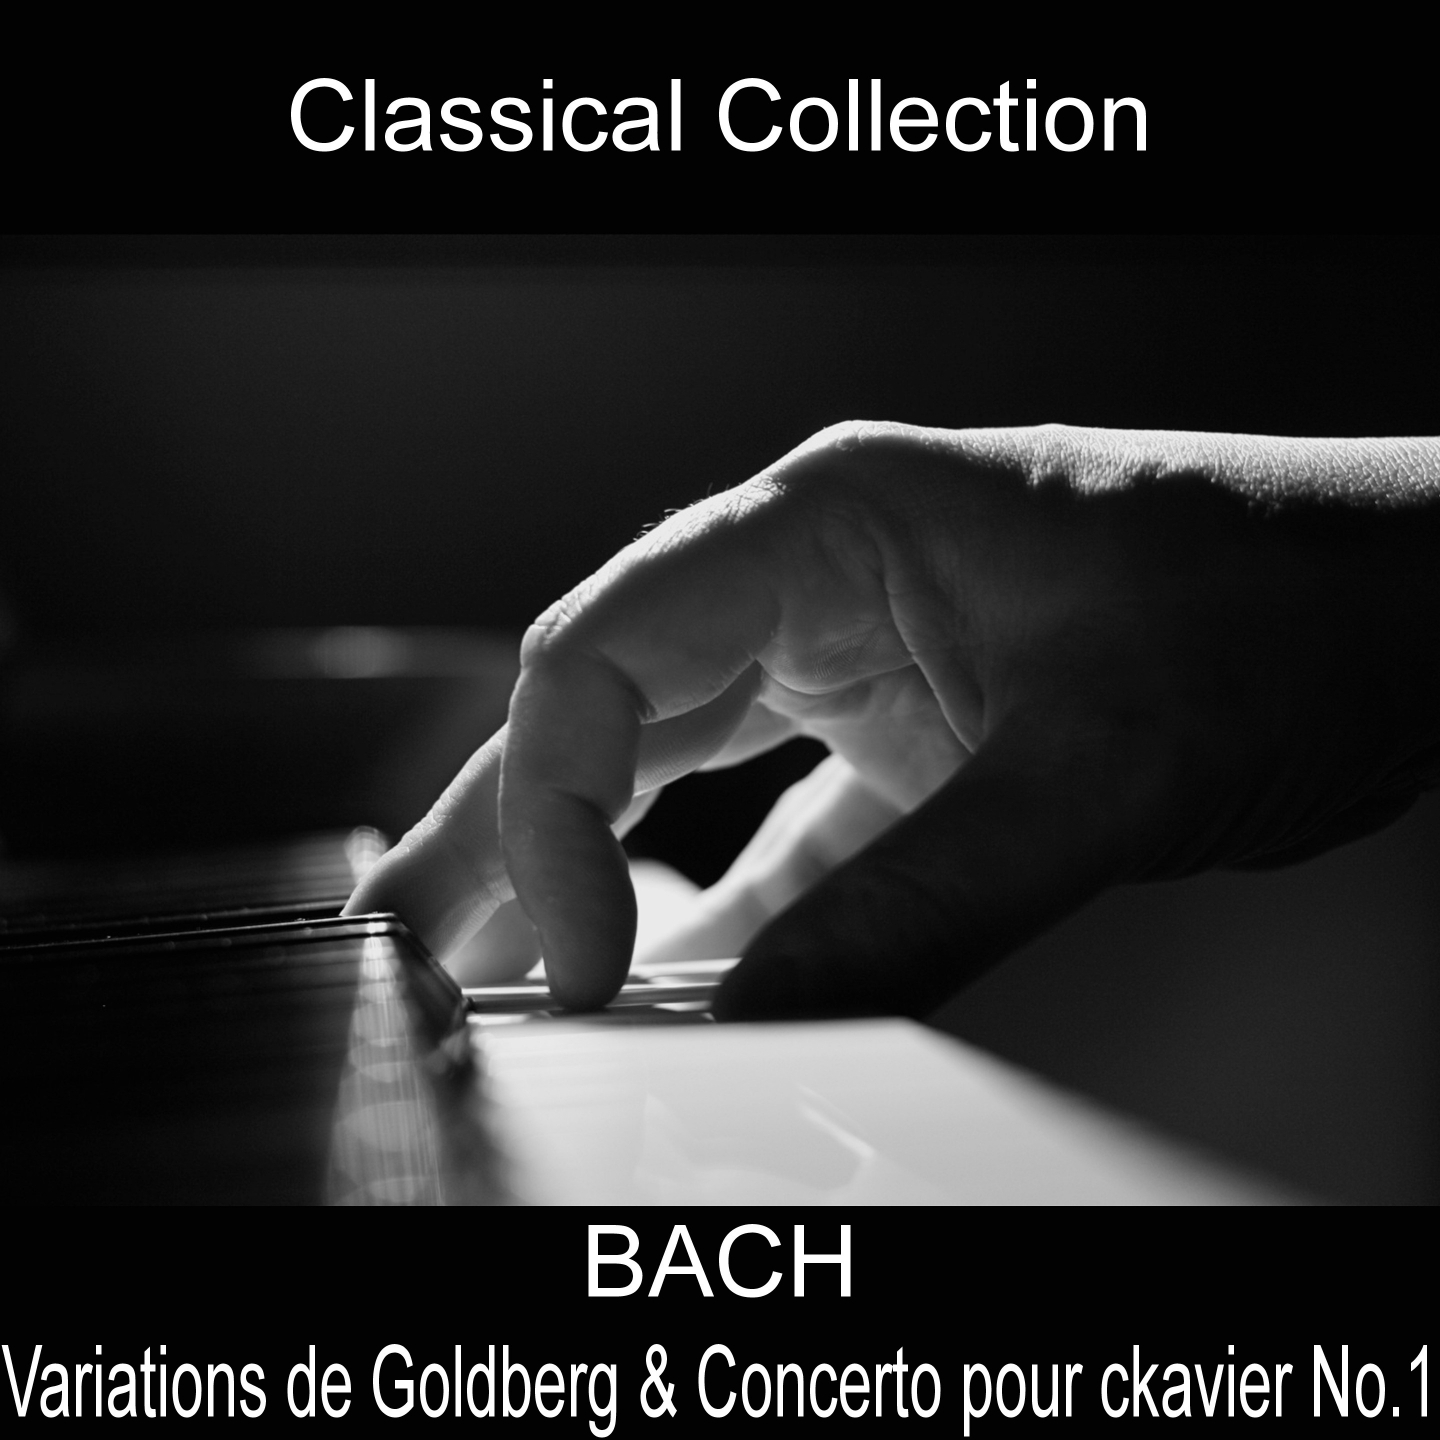 Concerto pour Clavier No. 1 in D Minor, BWV 1052: II. Adagio